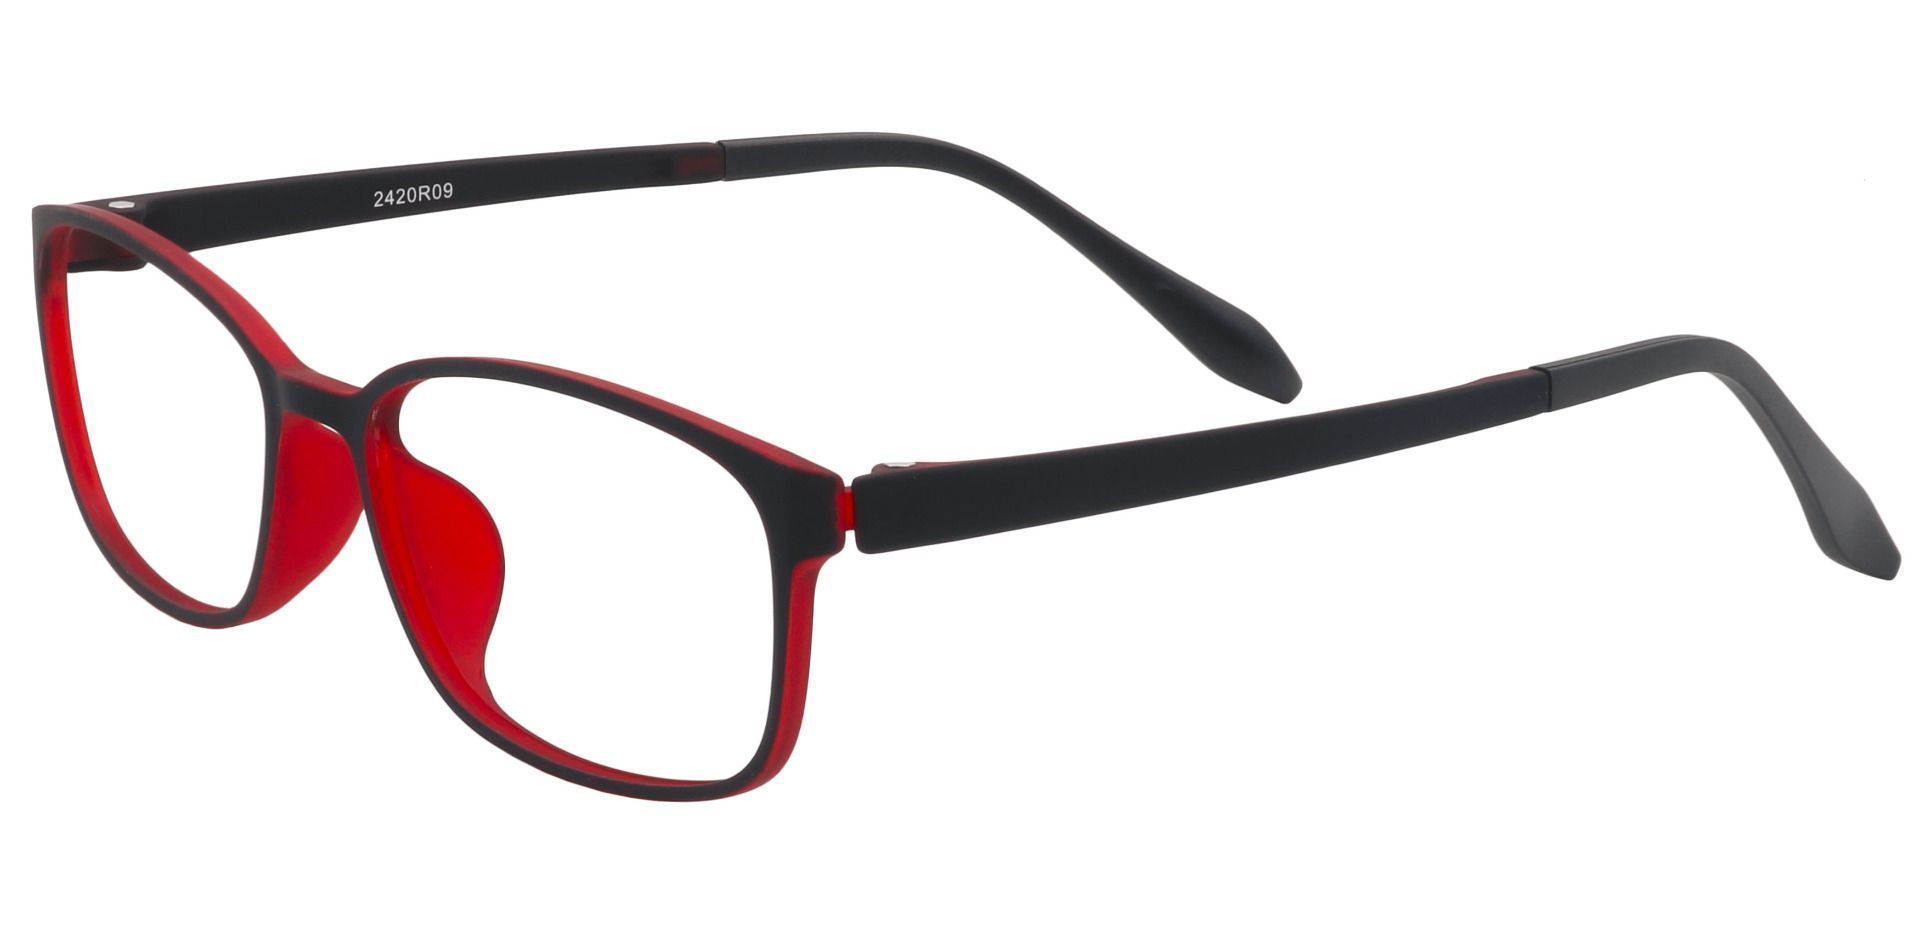 Merlot Rectangle Lined Bifocal Glasses - Matte Black/red